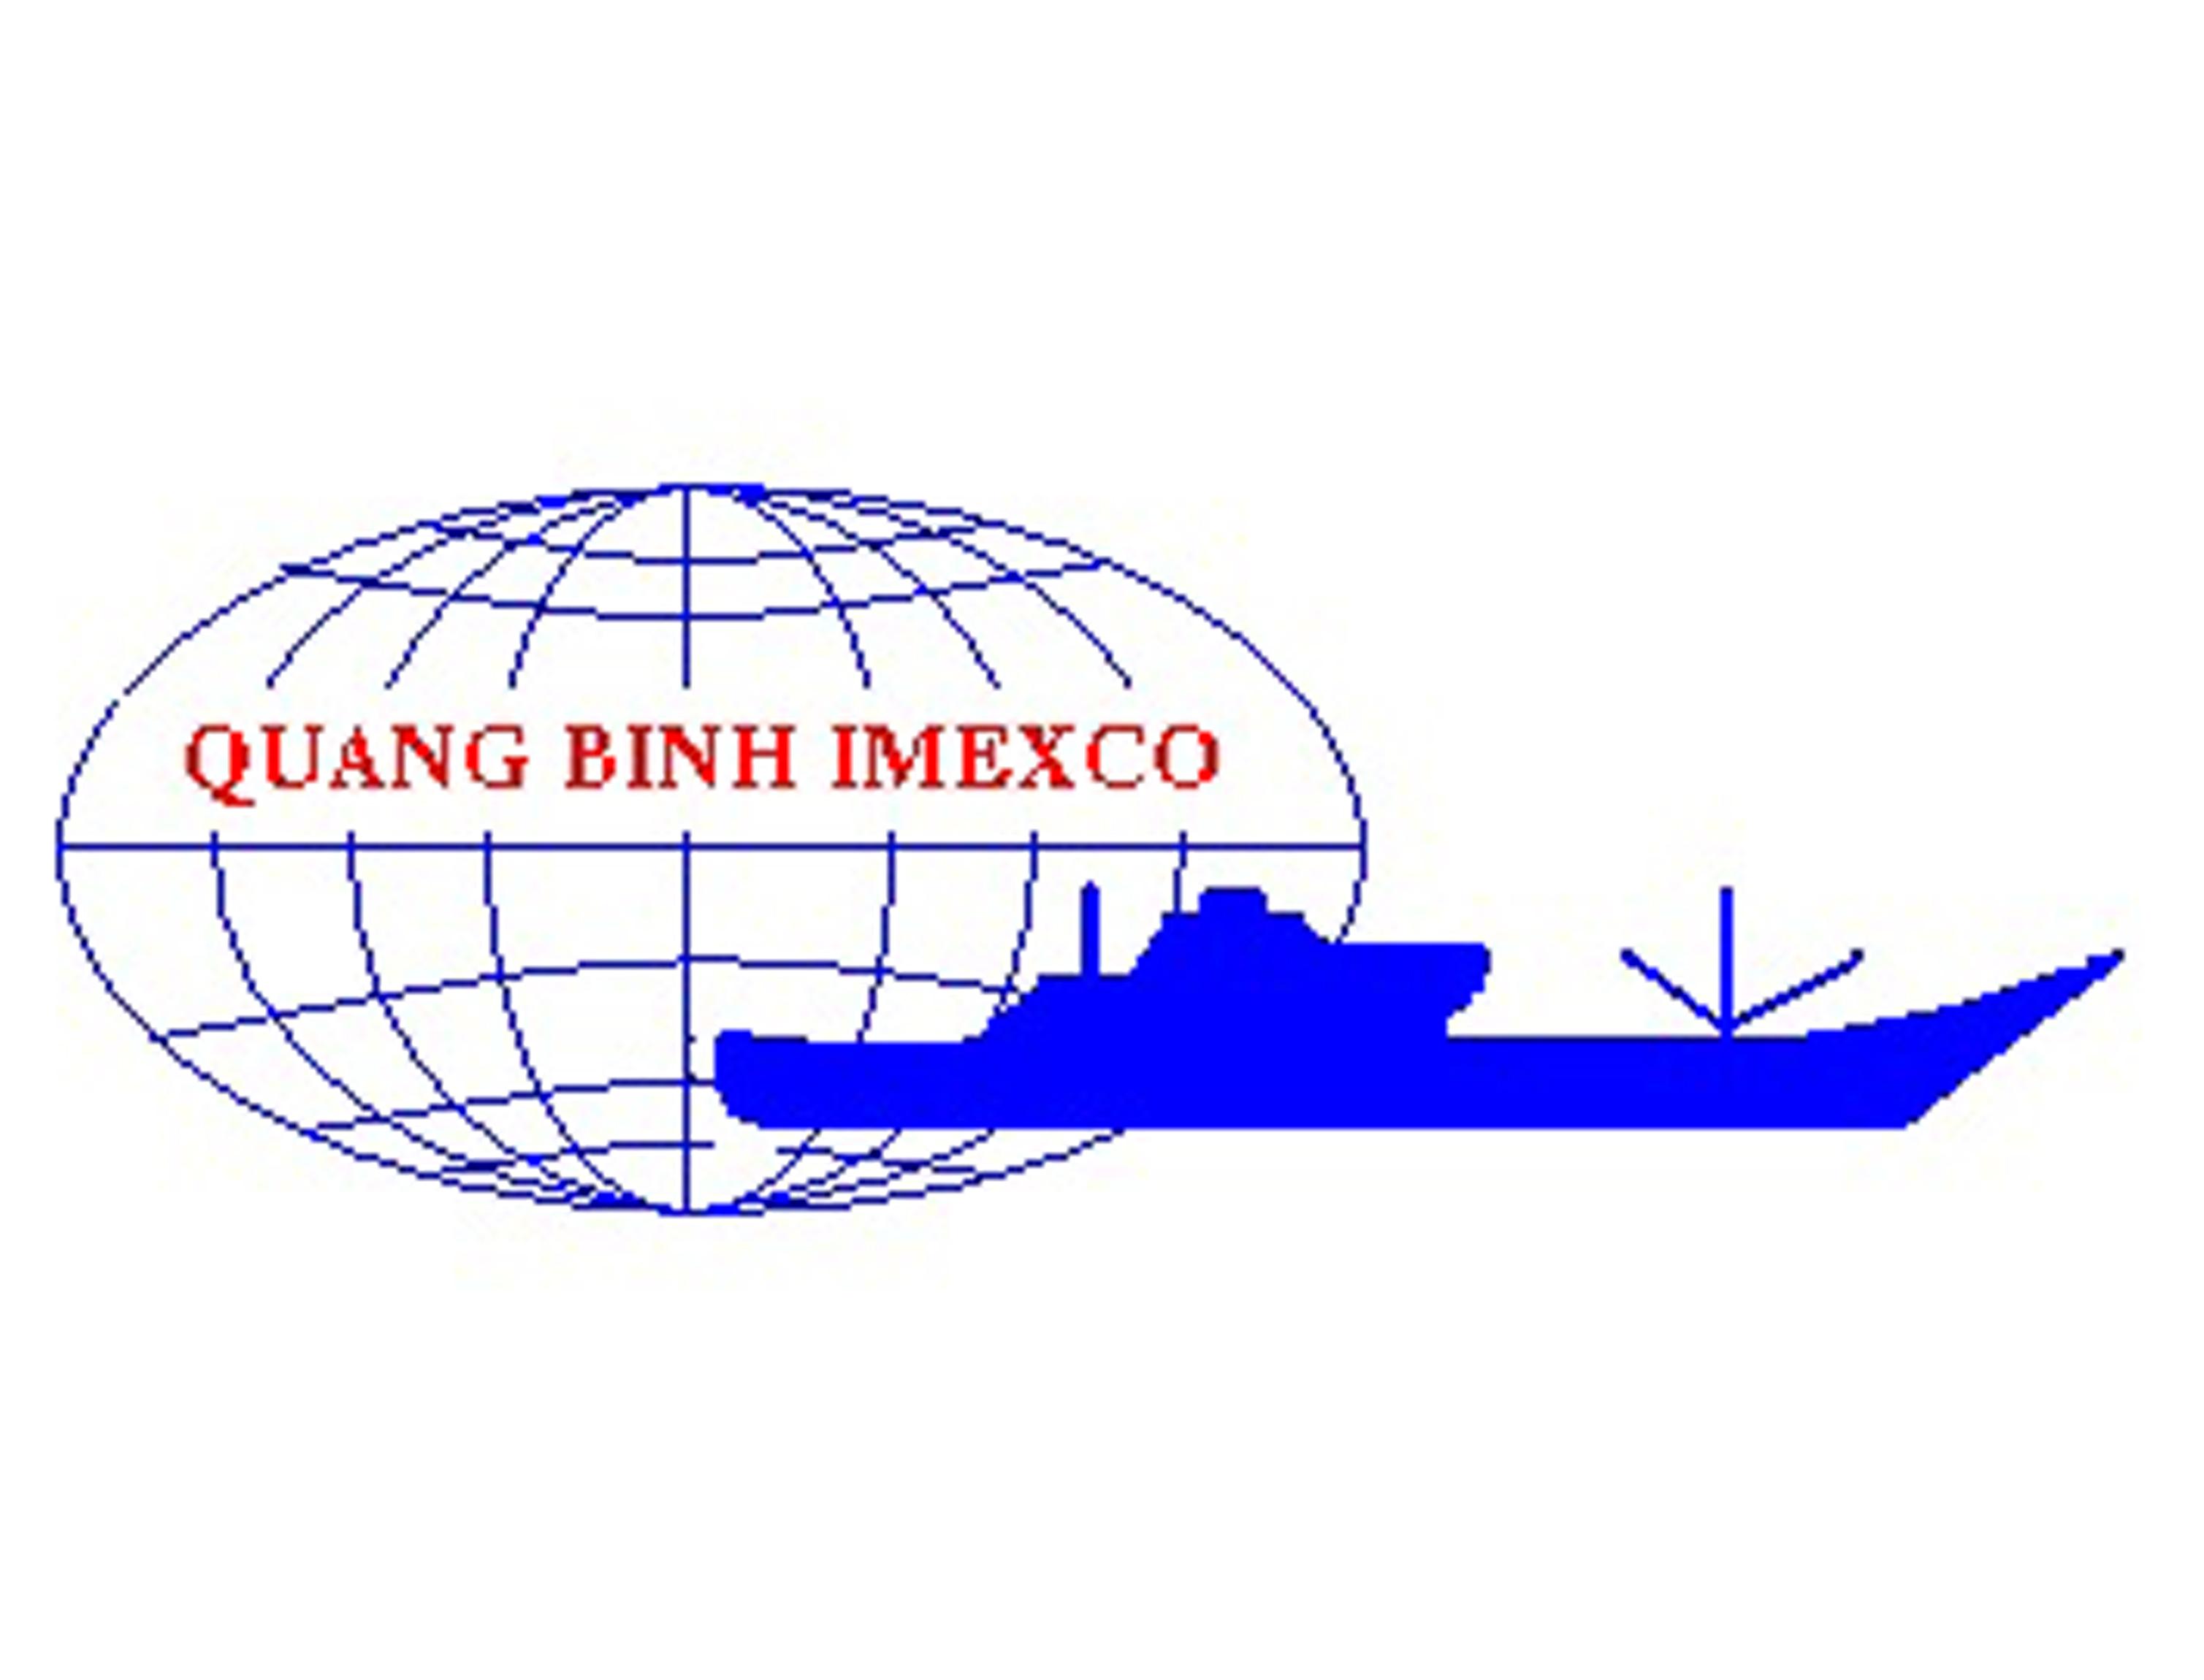 QUANG BINH IMPORT EXPORT JOINT STOCK COMPANY